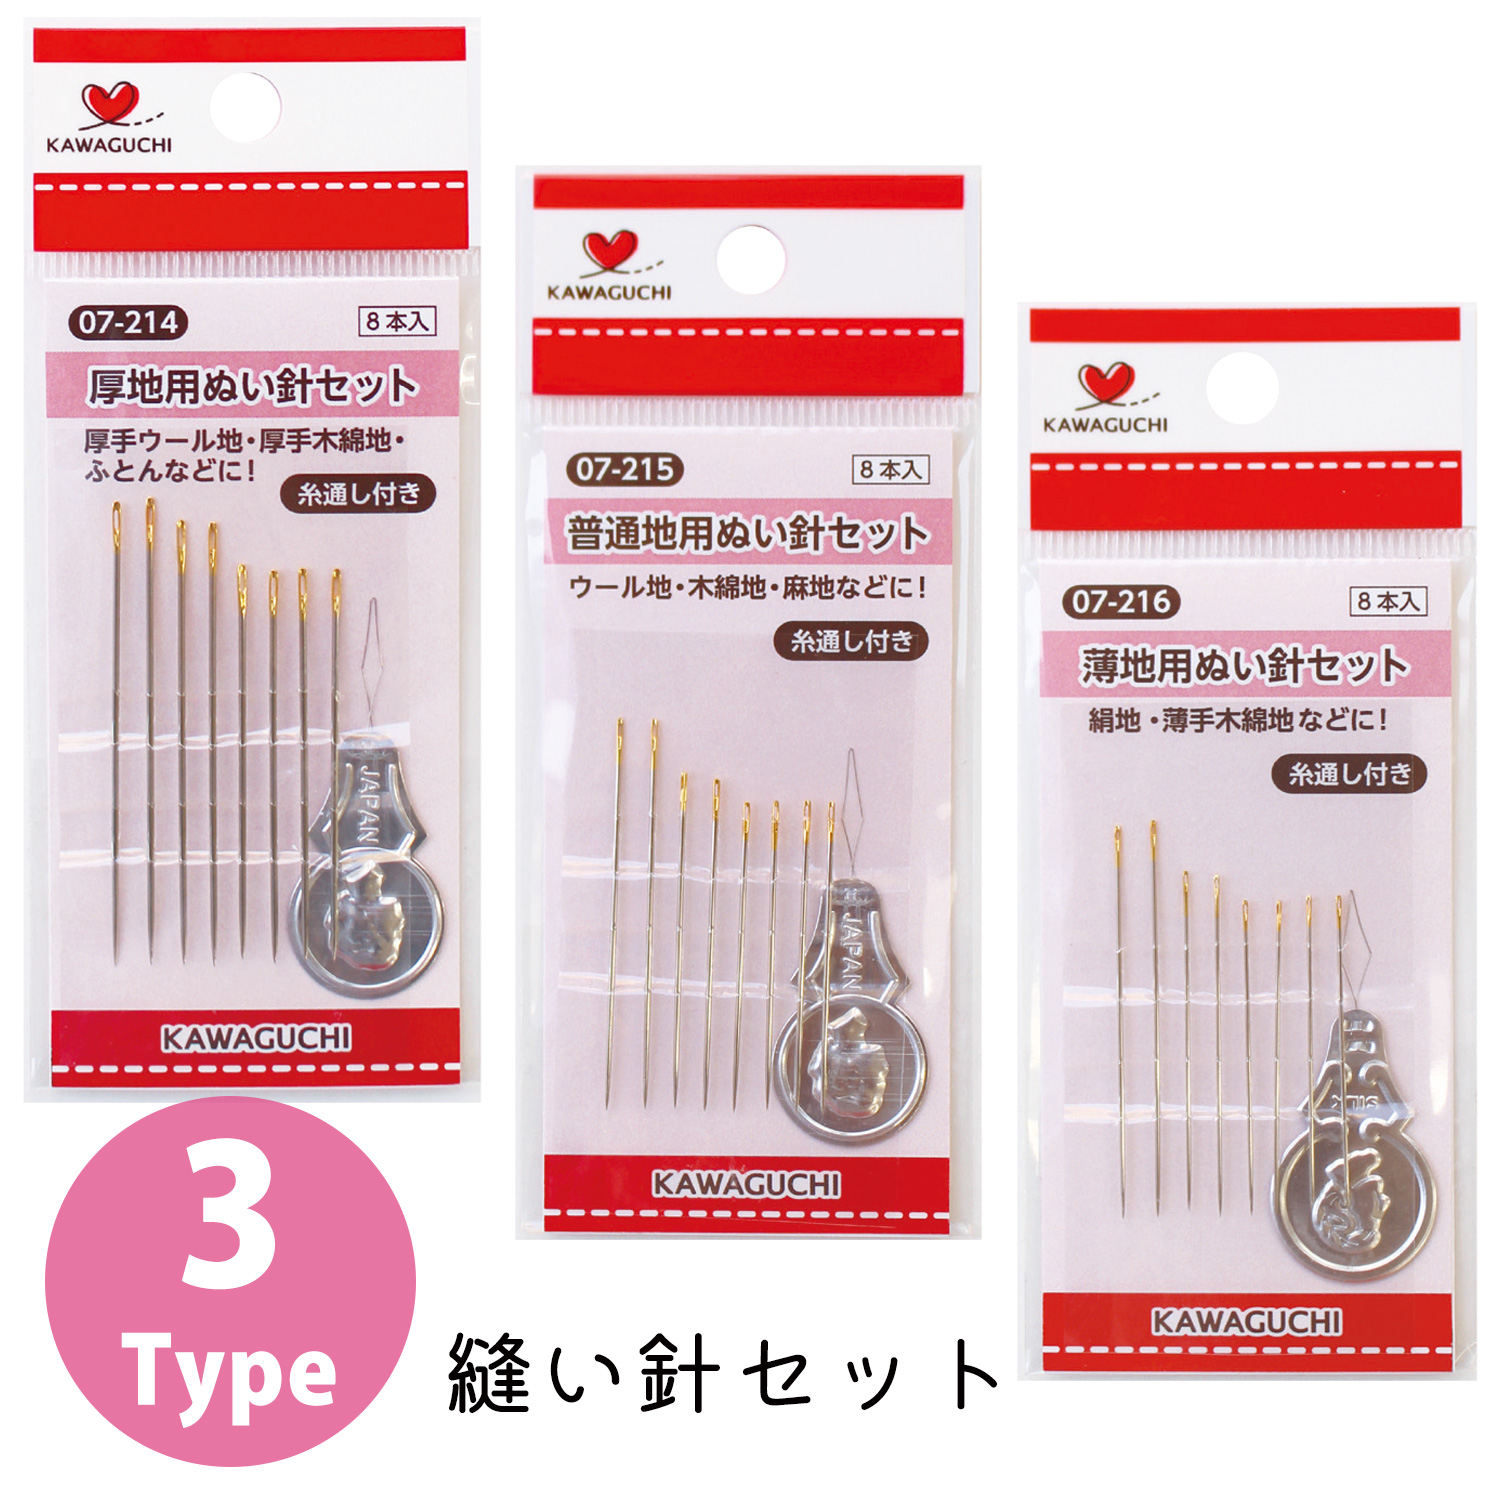 TK KAWAGUCHI sewing needle set 8 pieces (pieces)